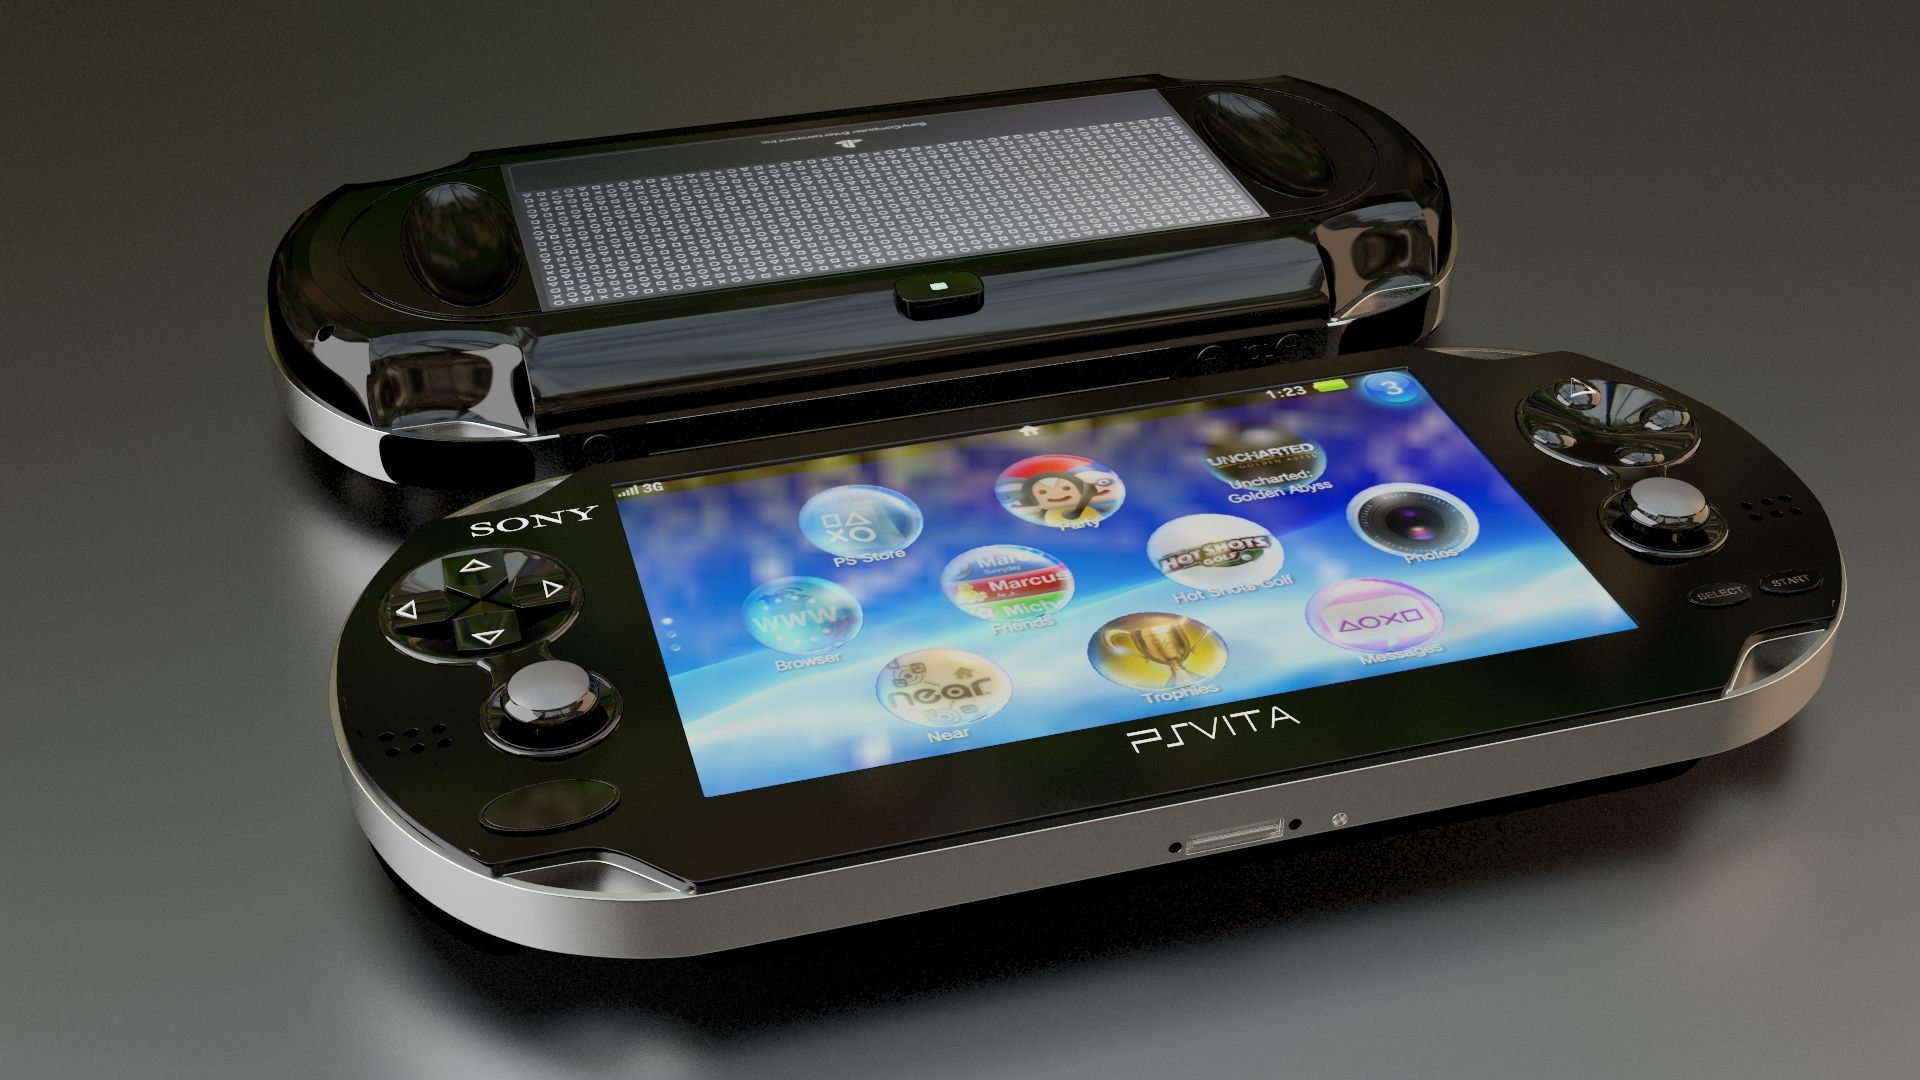 PSP VIta modelling 3DS Max by ctl3d on DeviantArt